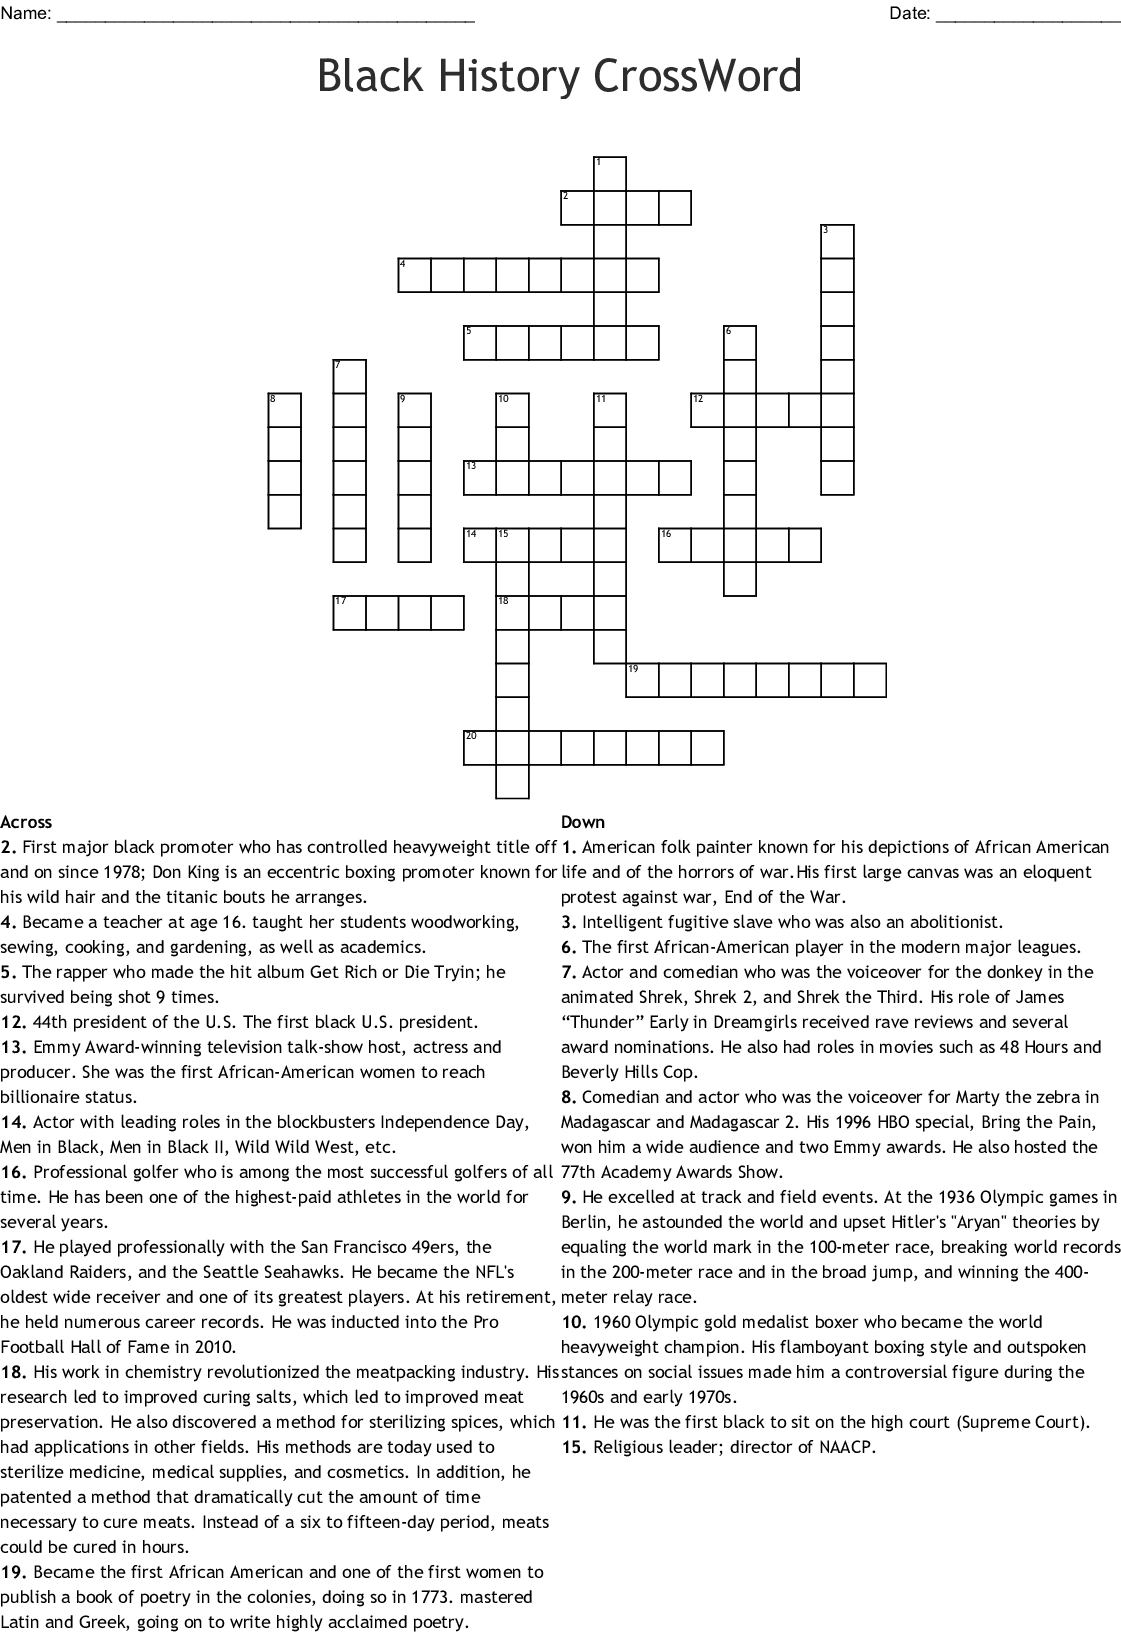 Black History Crossword - Wordmint - Black History Crossword Puzzle Printable